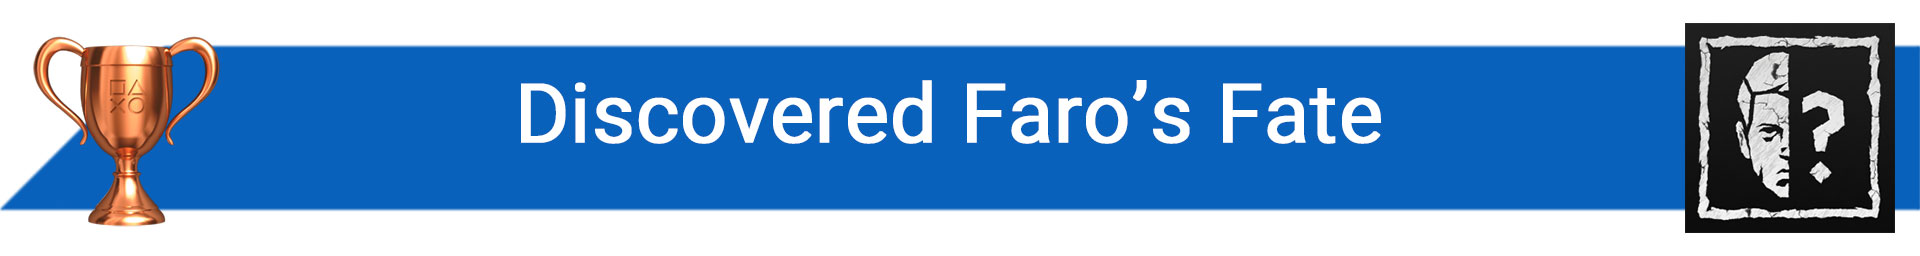 توضیح Discovered Faro’s Fate